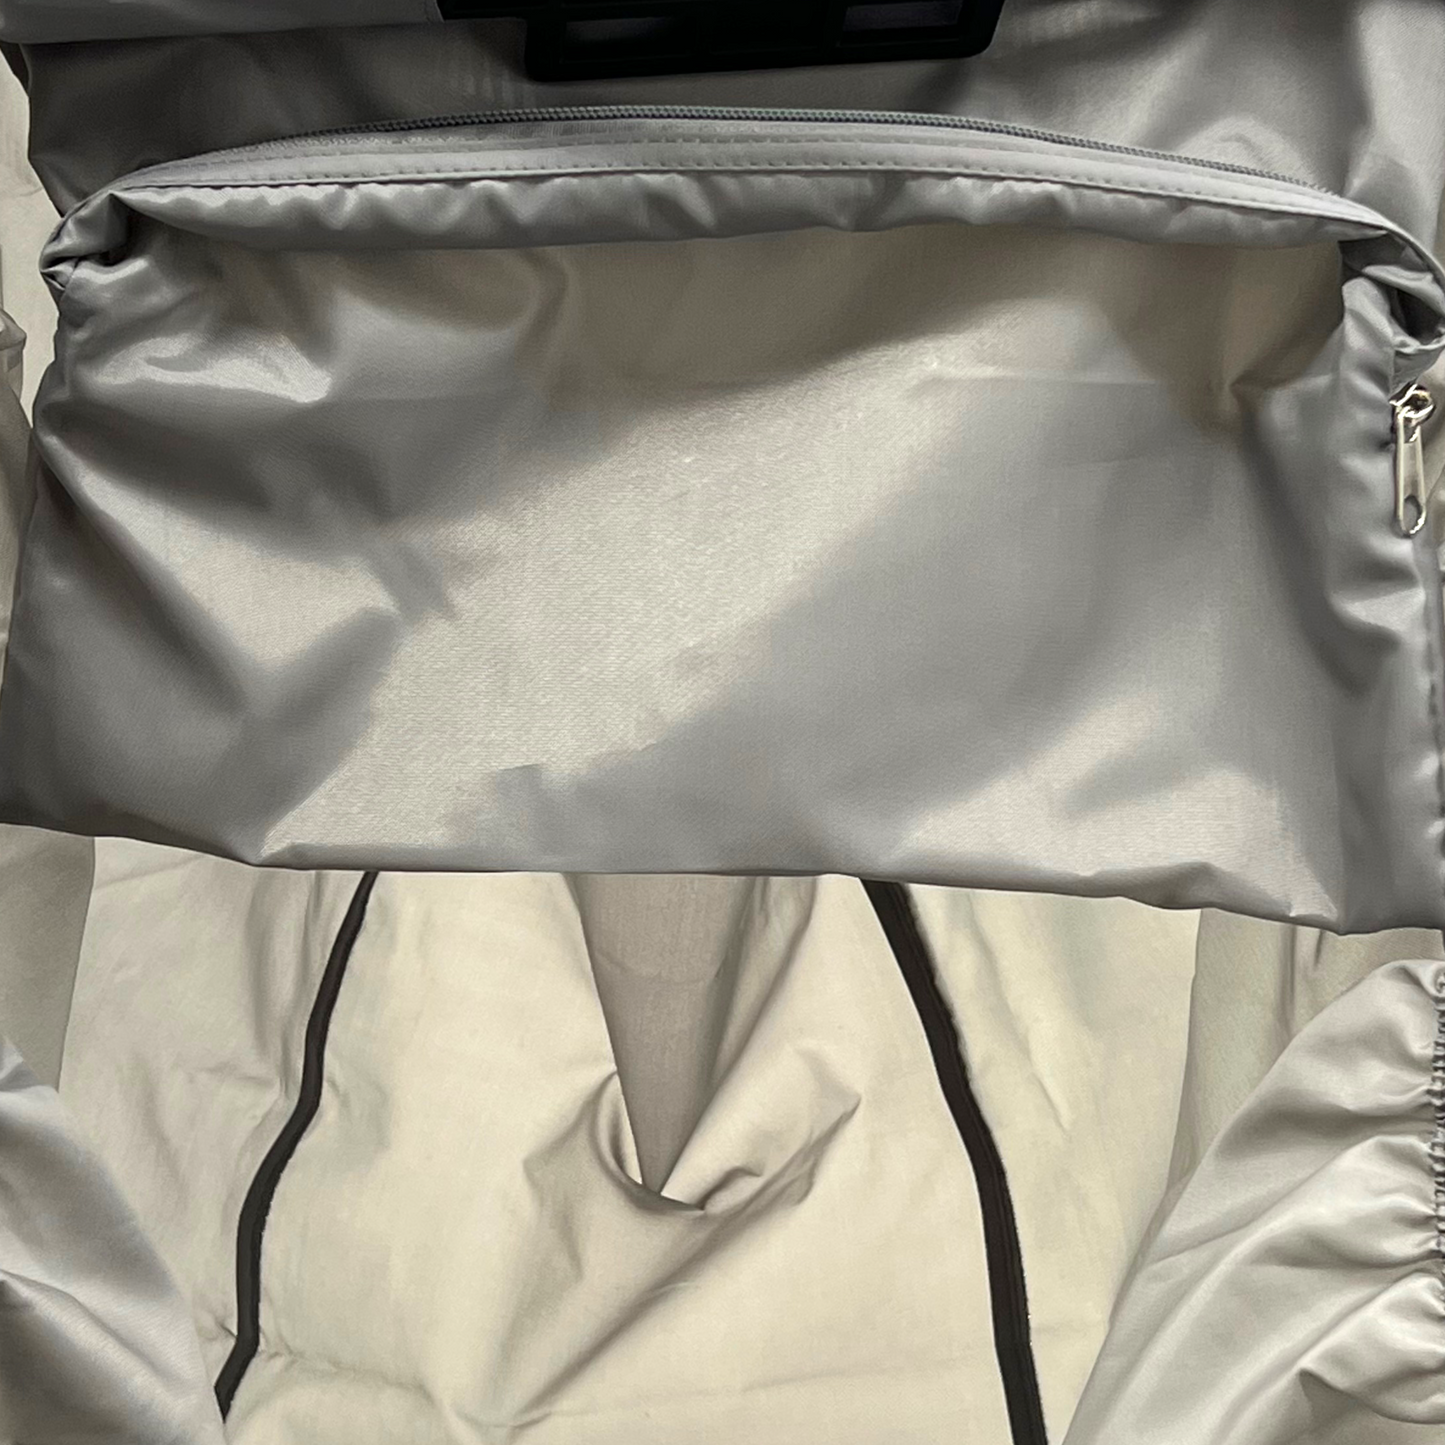 New Clever Shopper - The Reusable Unique Shopping Cart Bag - Color Gray